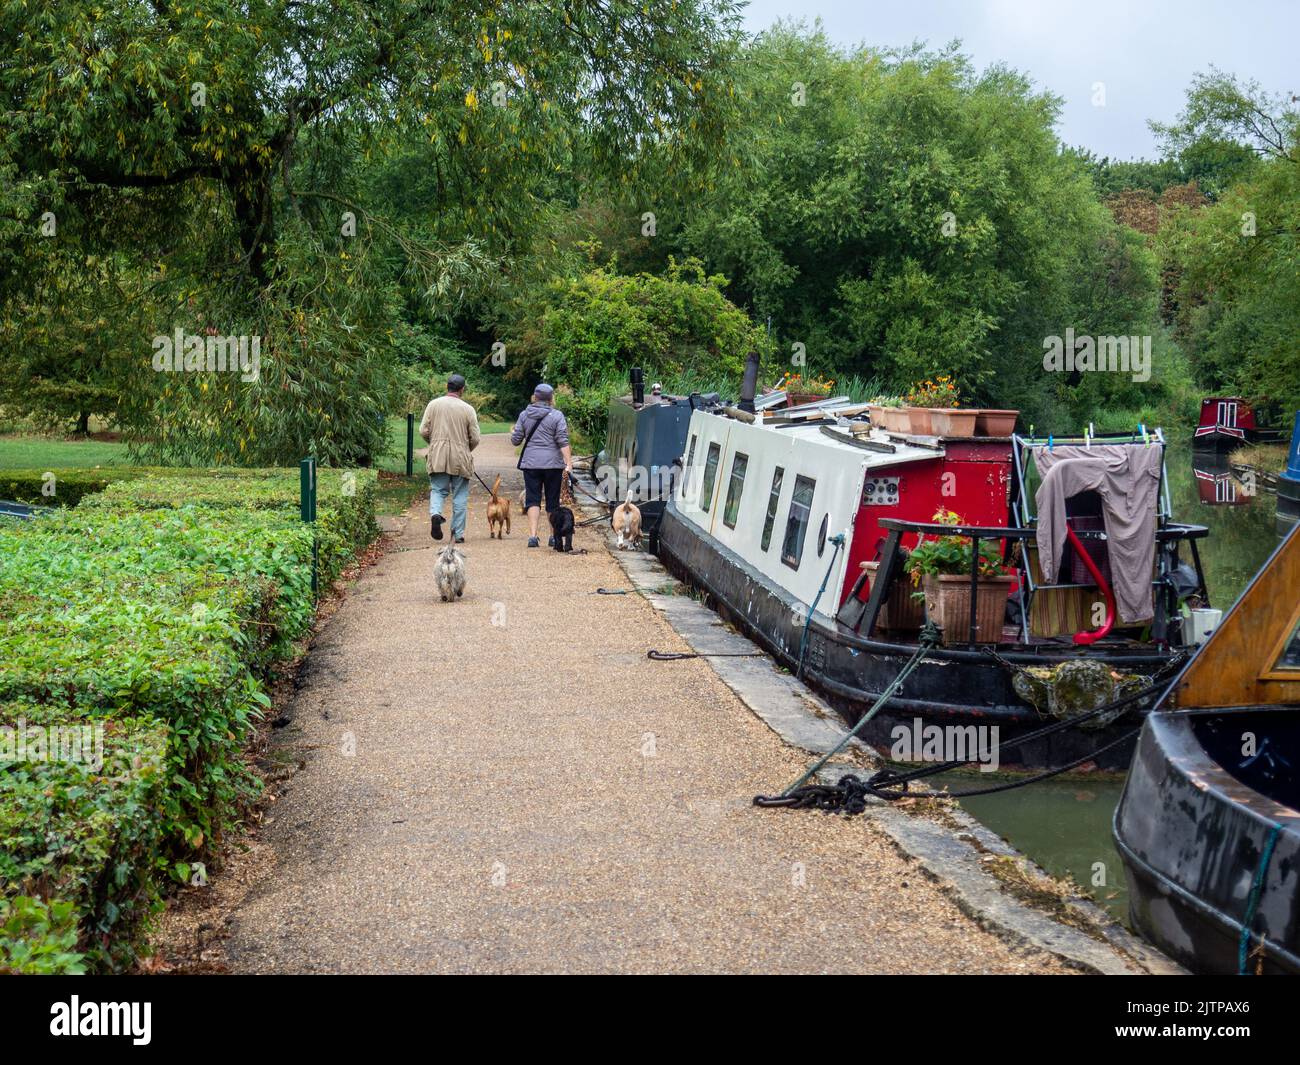 Dog walkers and narrowboats, Grand Union canal, Campbell Park, Milton Keynes, UK Stock Photo